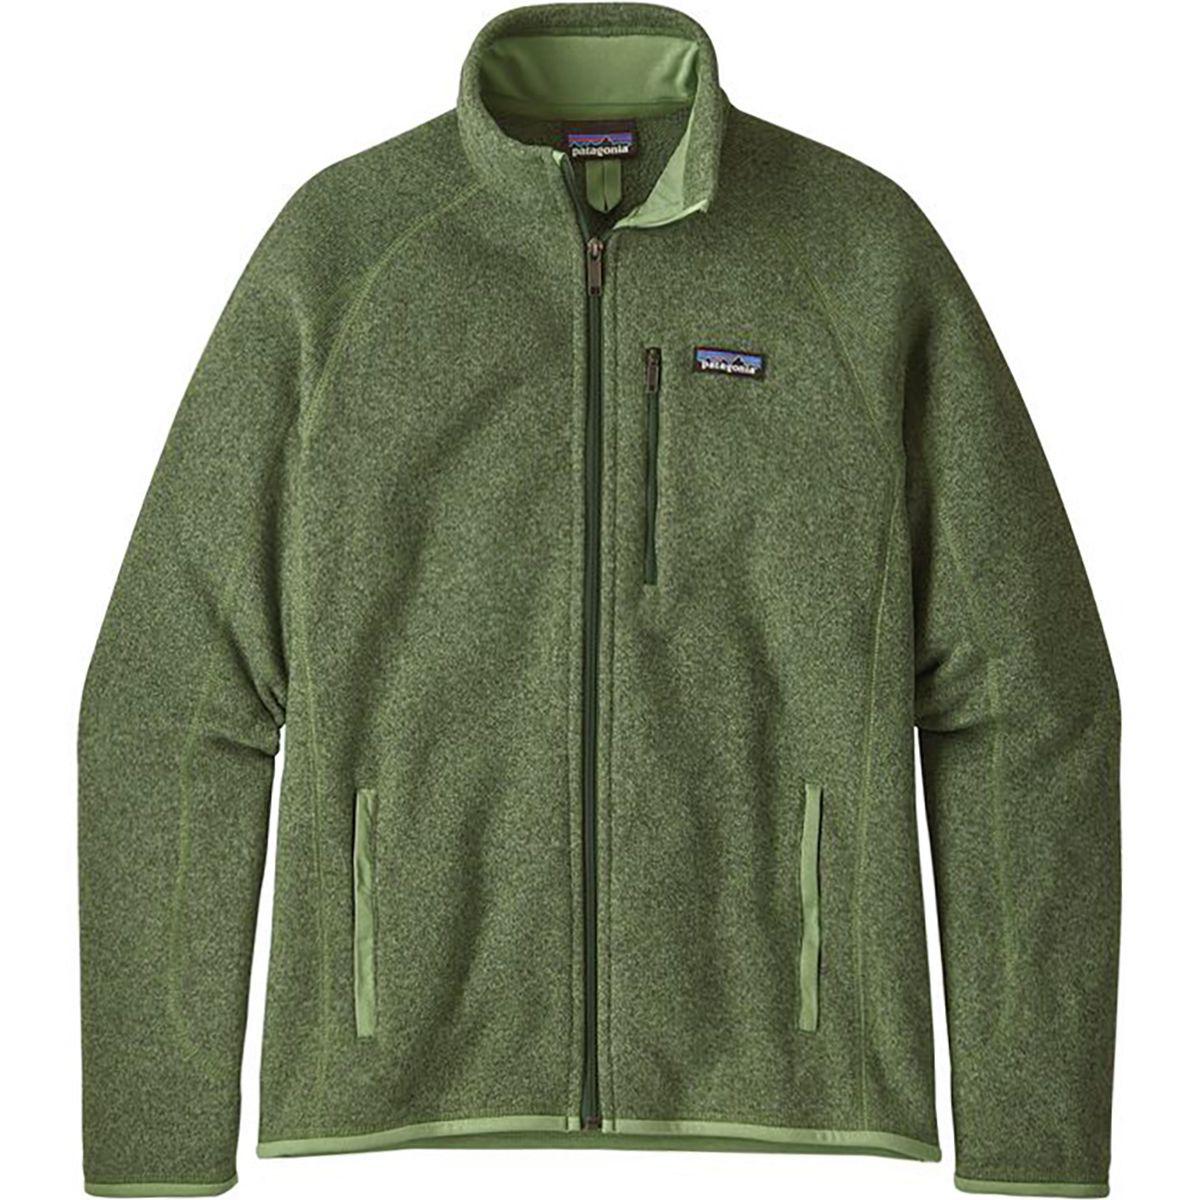 Patagonia Better Sweater Fleece Jacket in Green for Men - Lyst